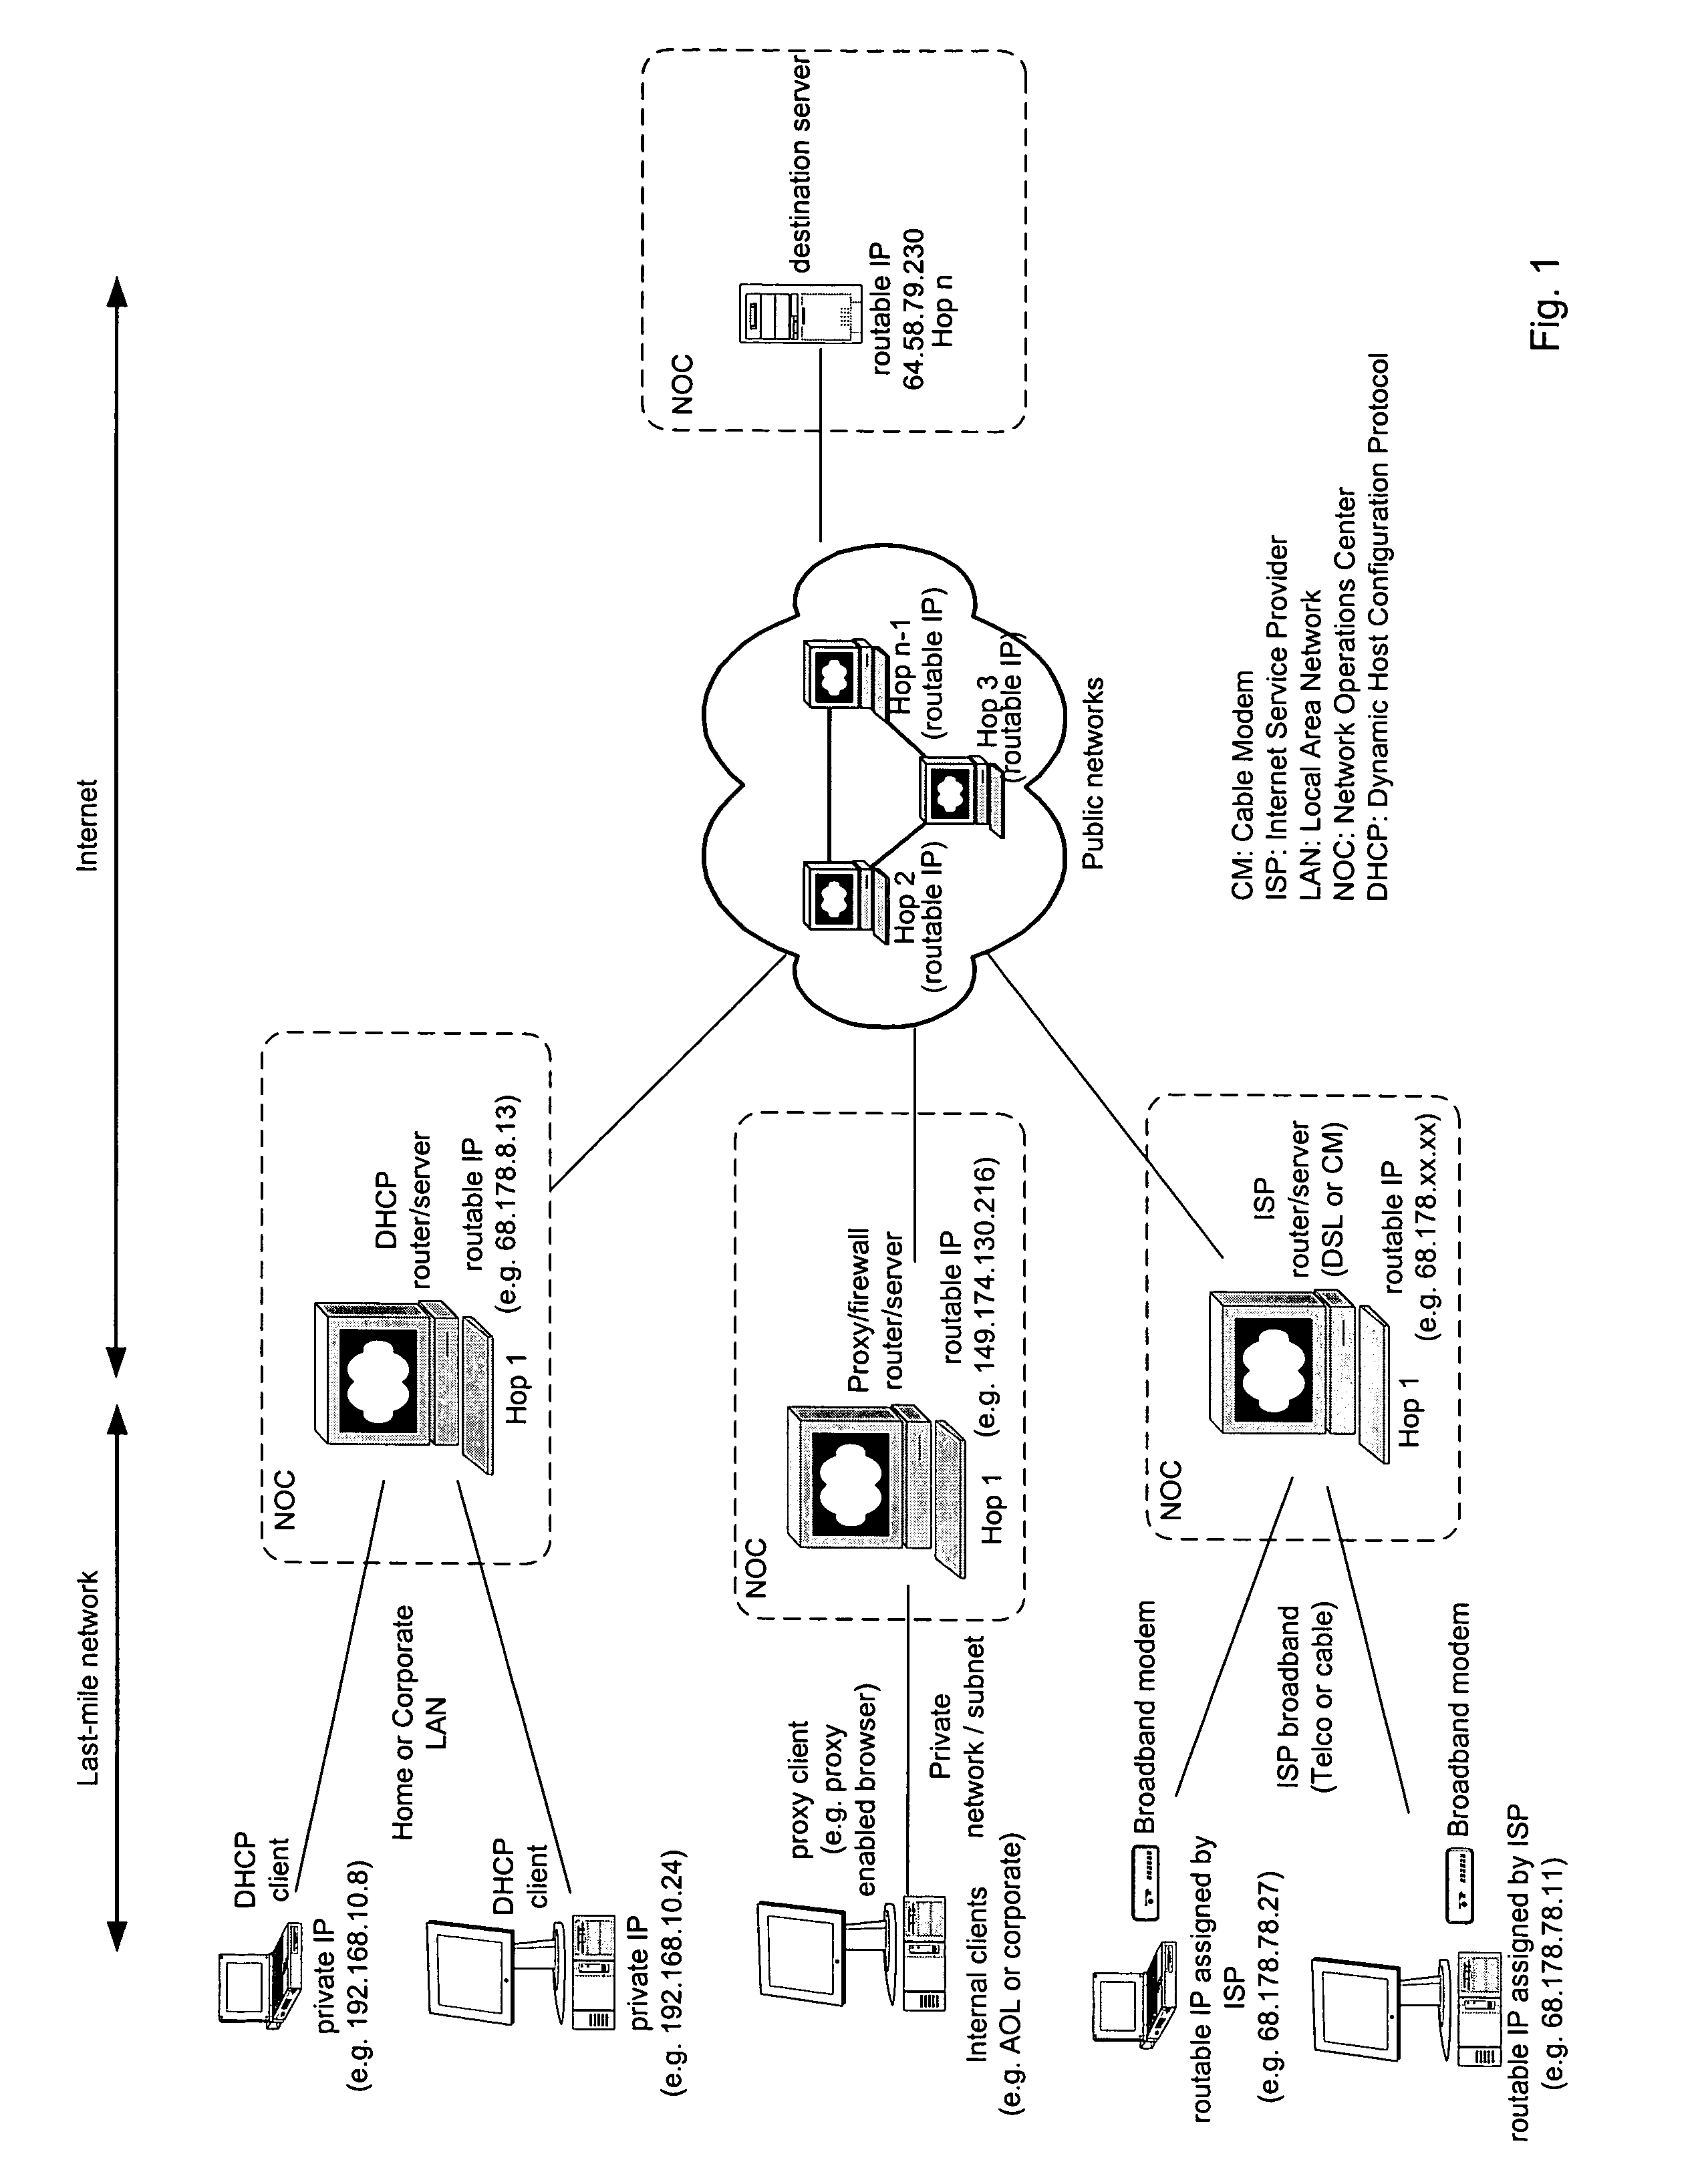 Network geo-location system